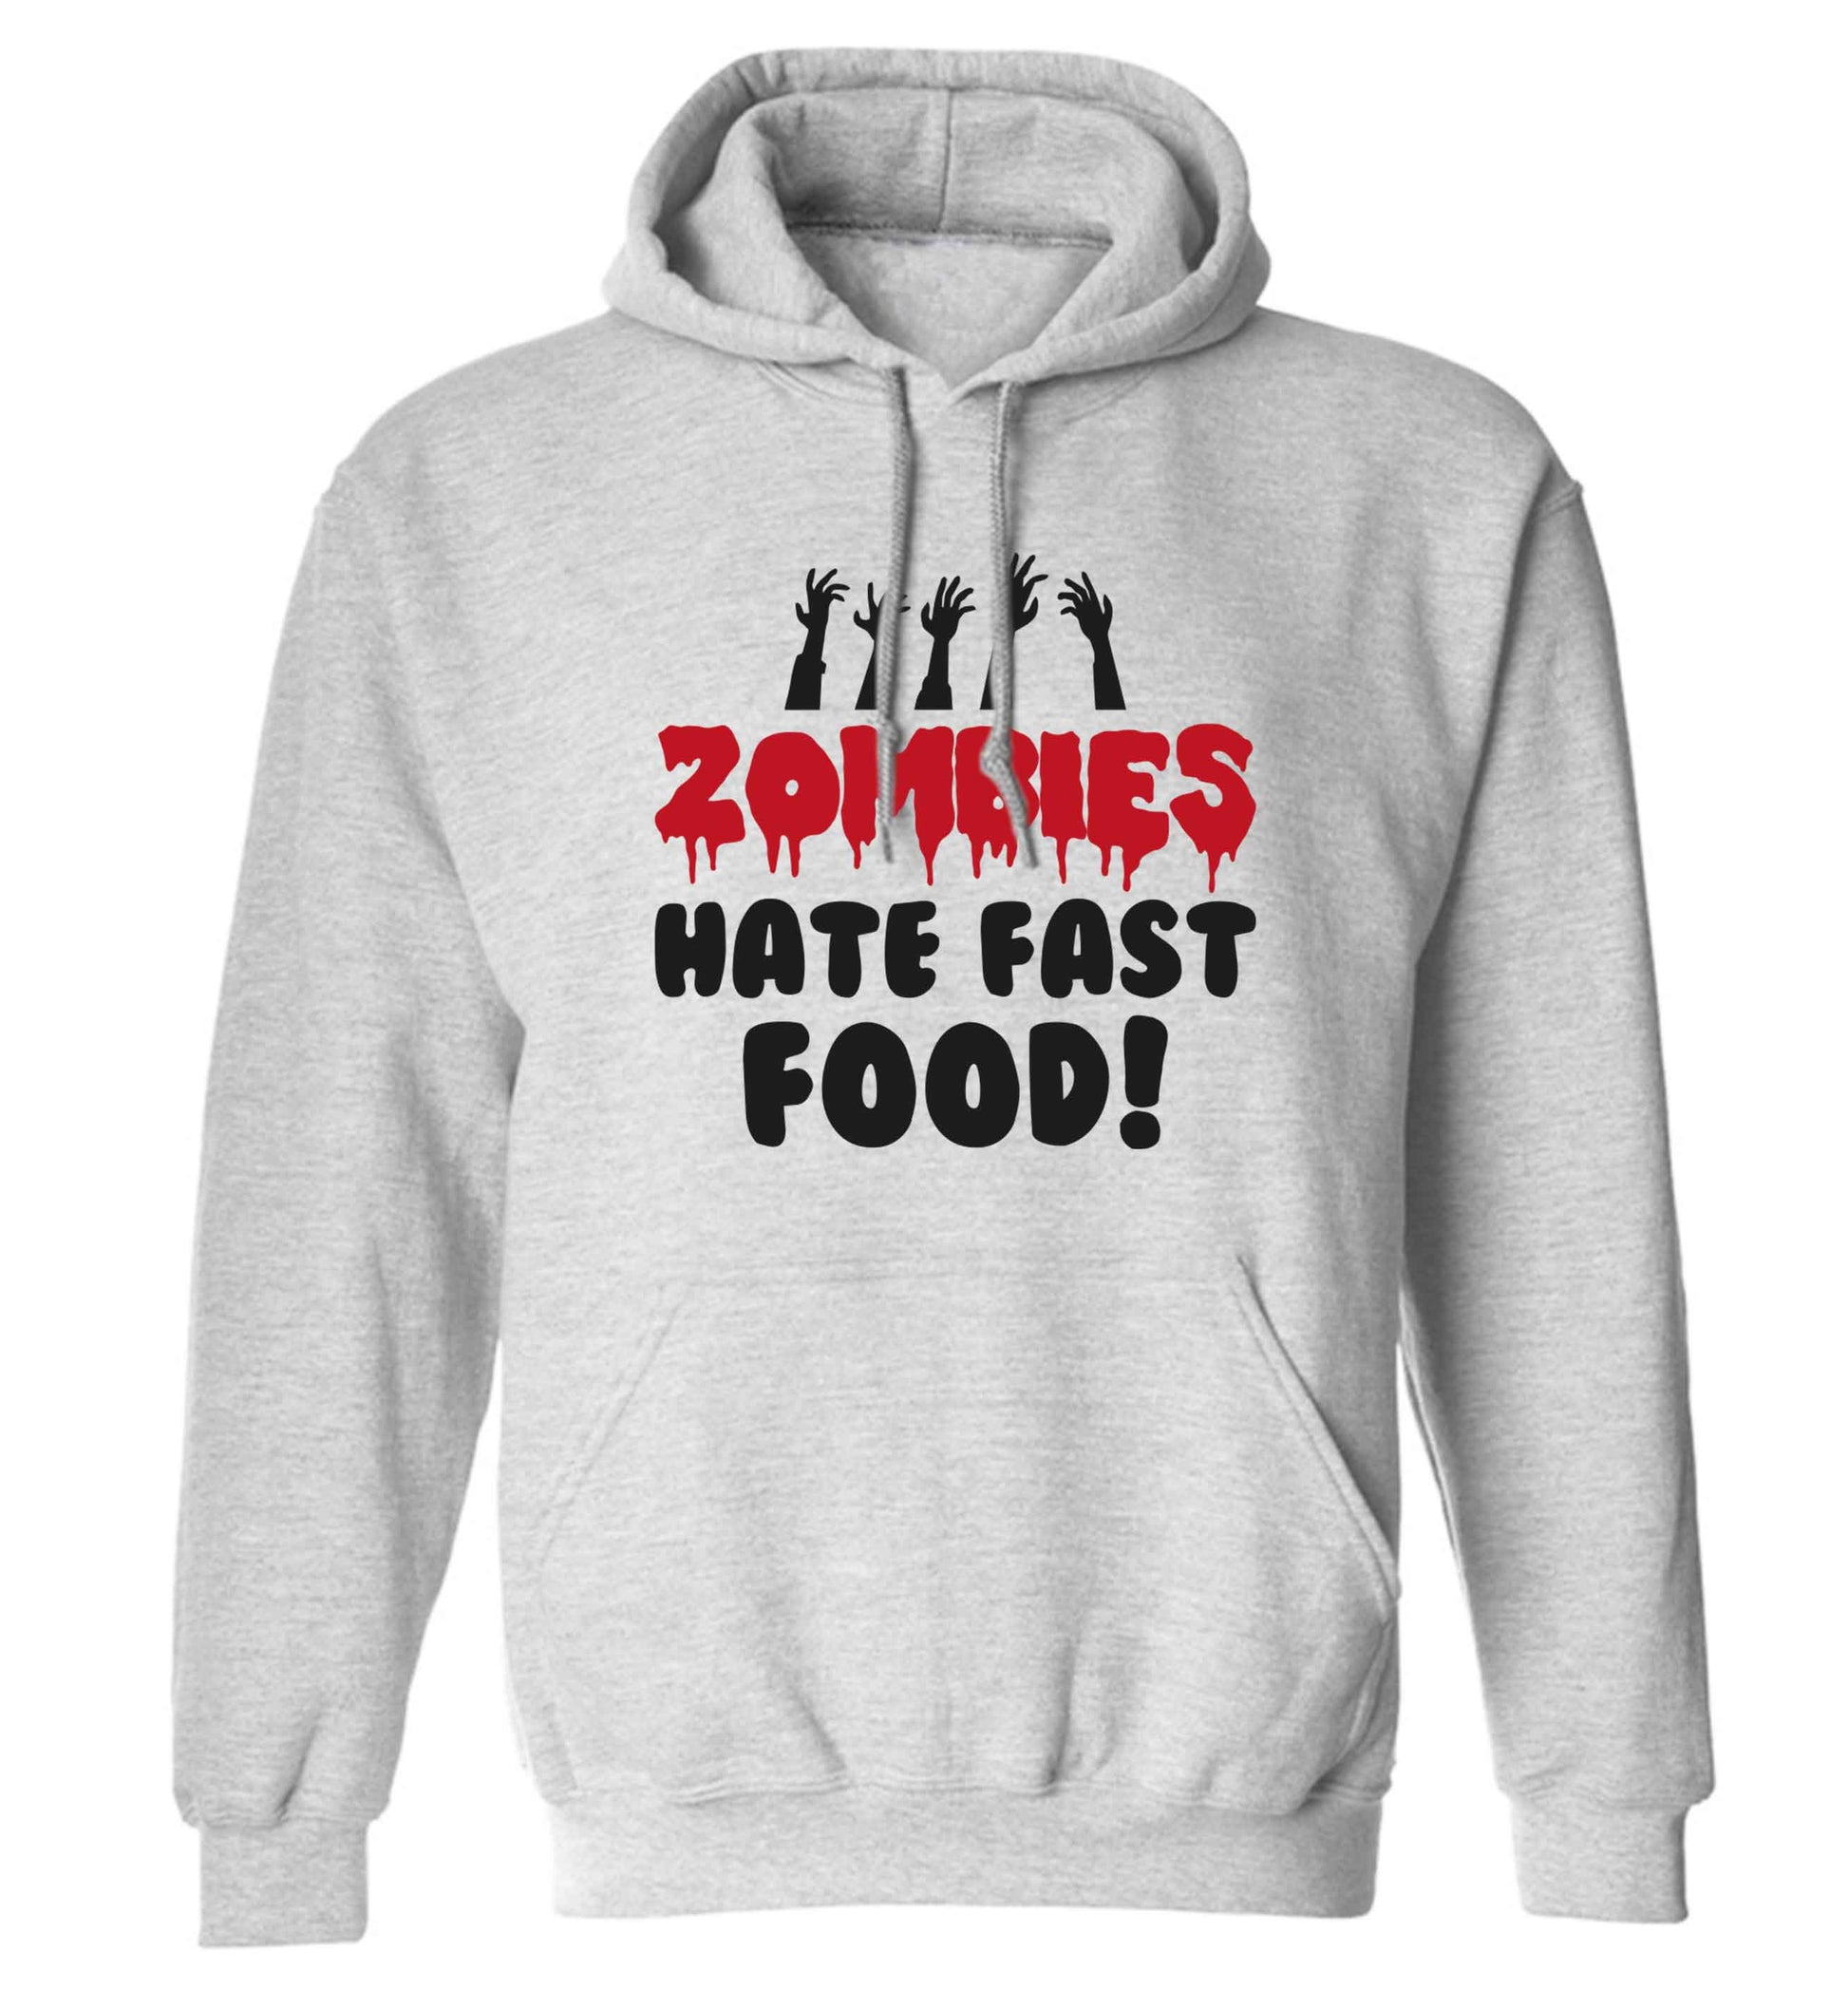 Zombies hate fast food adults unisex grey hoodie 2XL